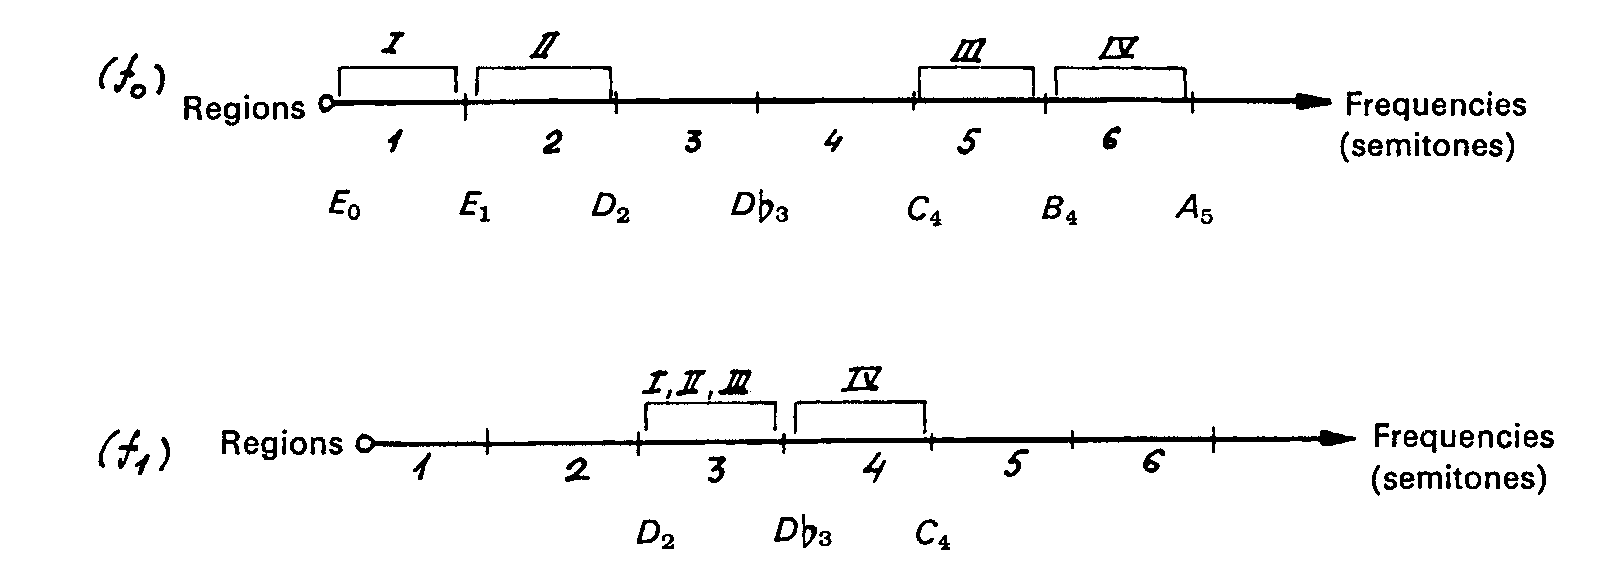 Xenakis frequency diagram